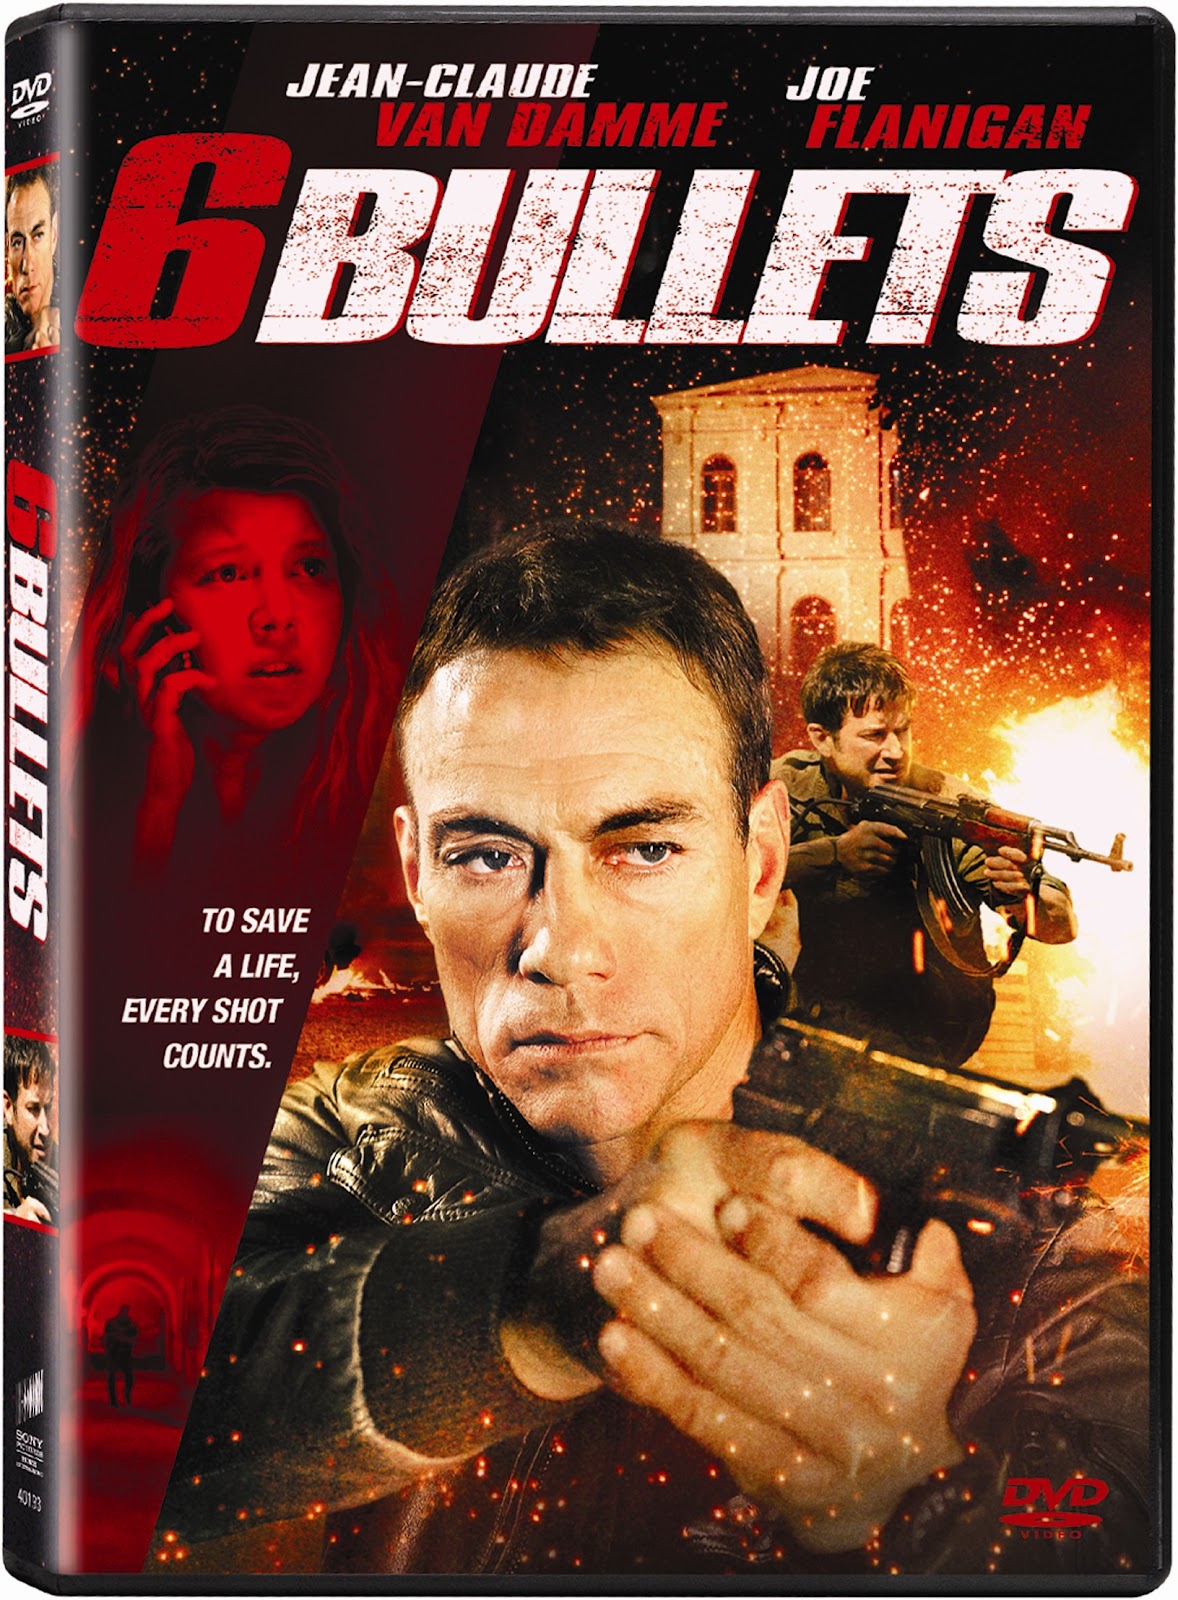  Six Bullets prochain JCVD  6+BULLETS+Box+Art